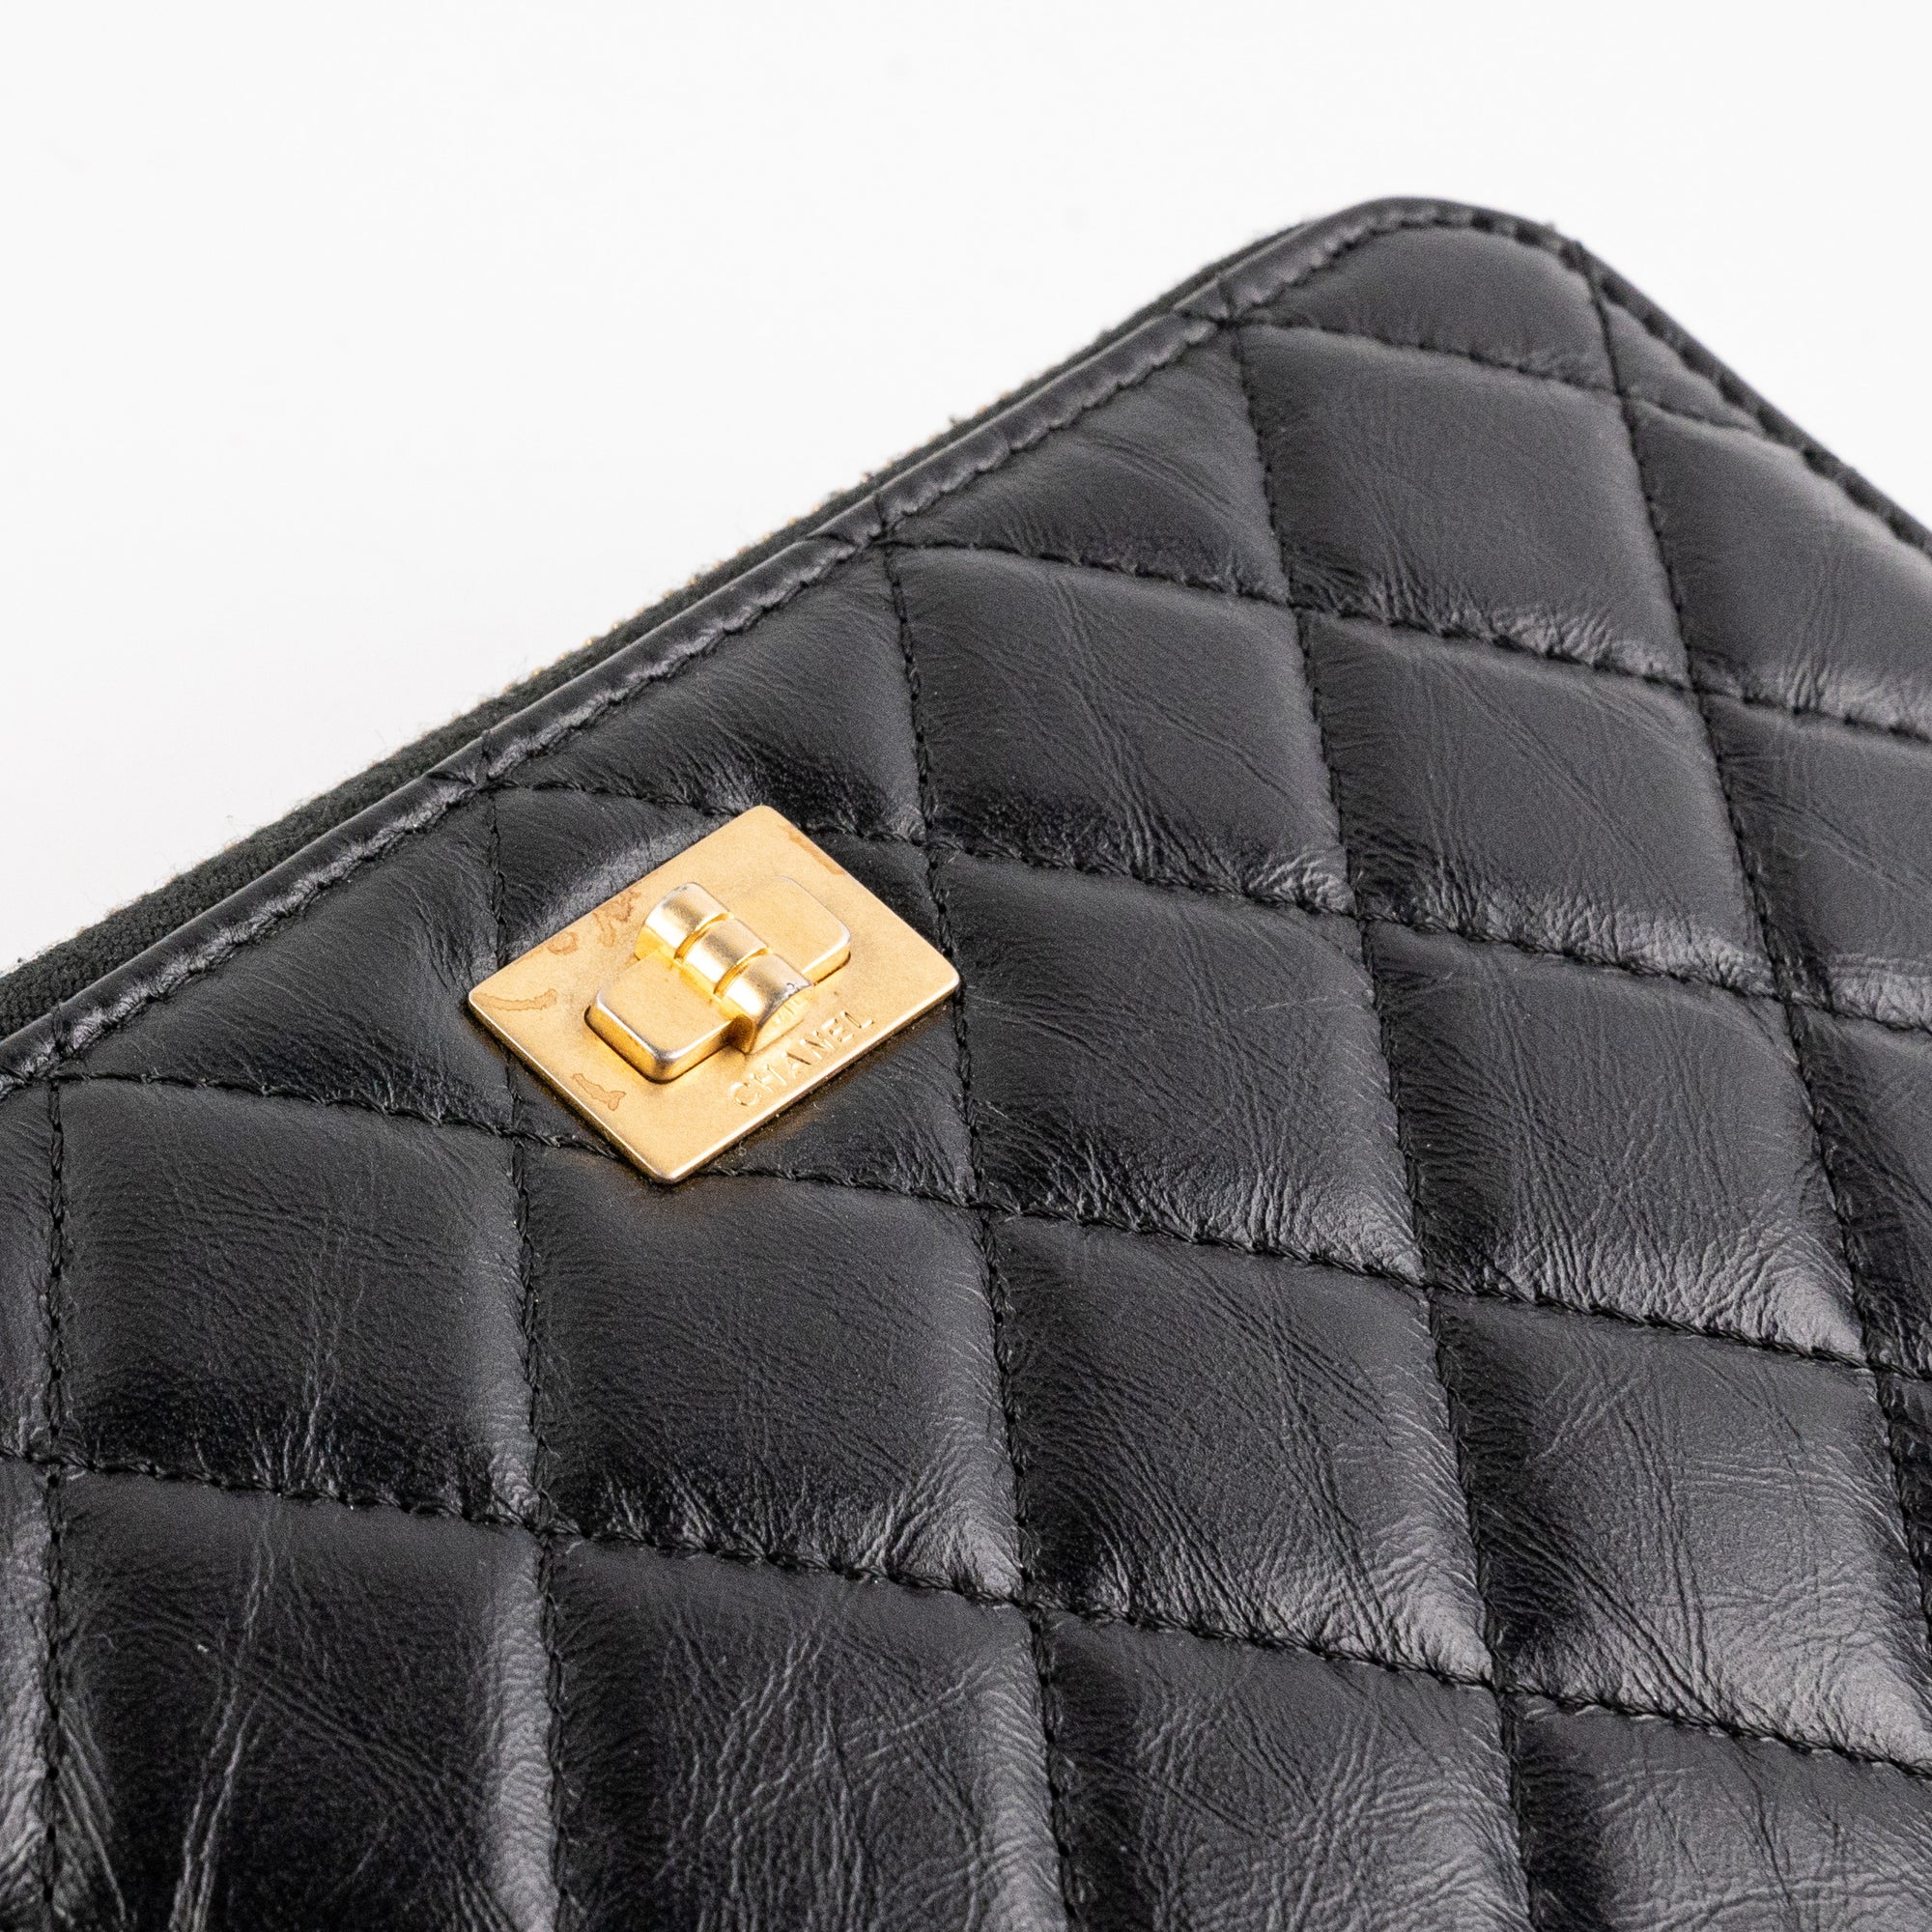 Chanel Reissue Wristlet Wallet Black - THE PURSE AFFAIR